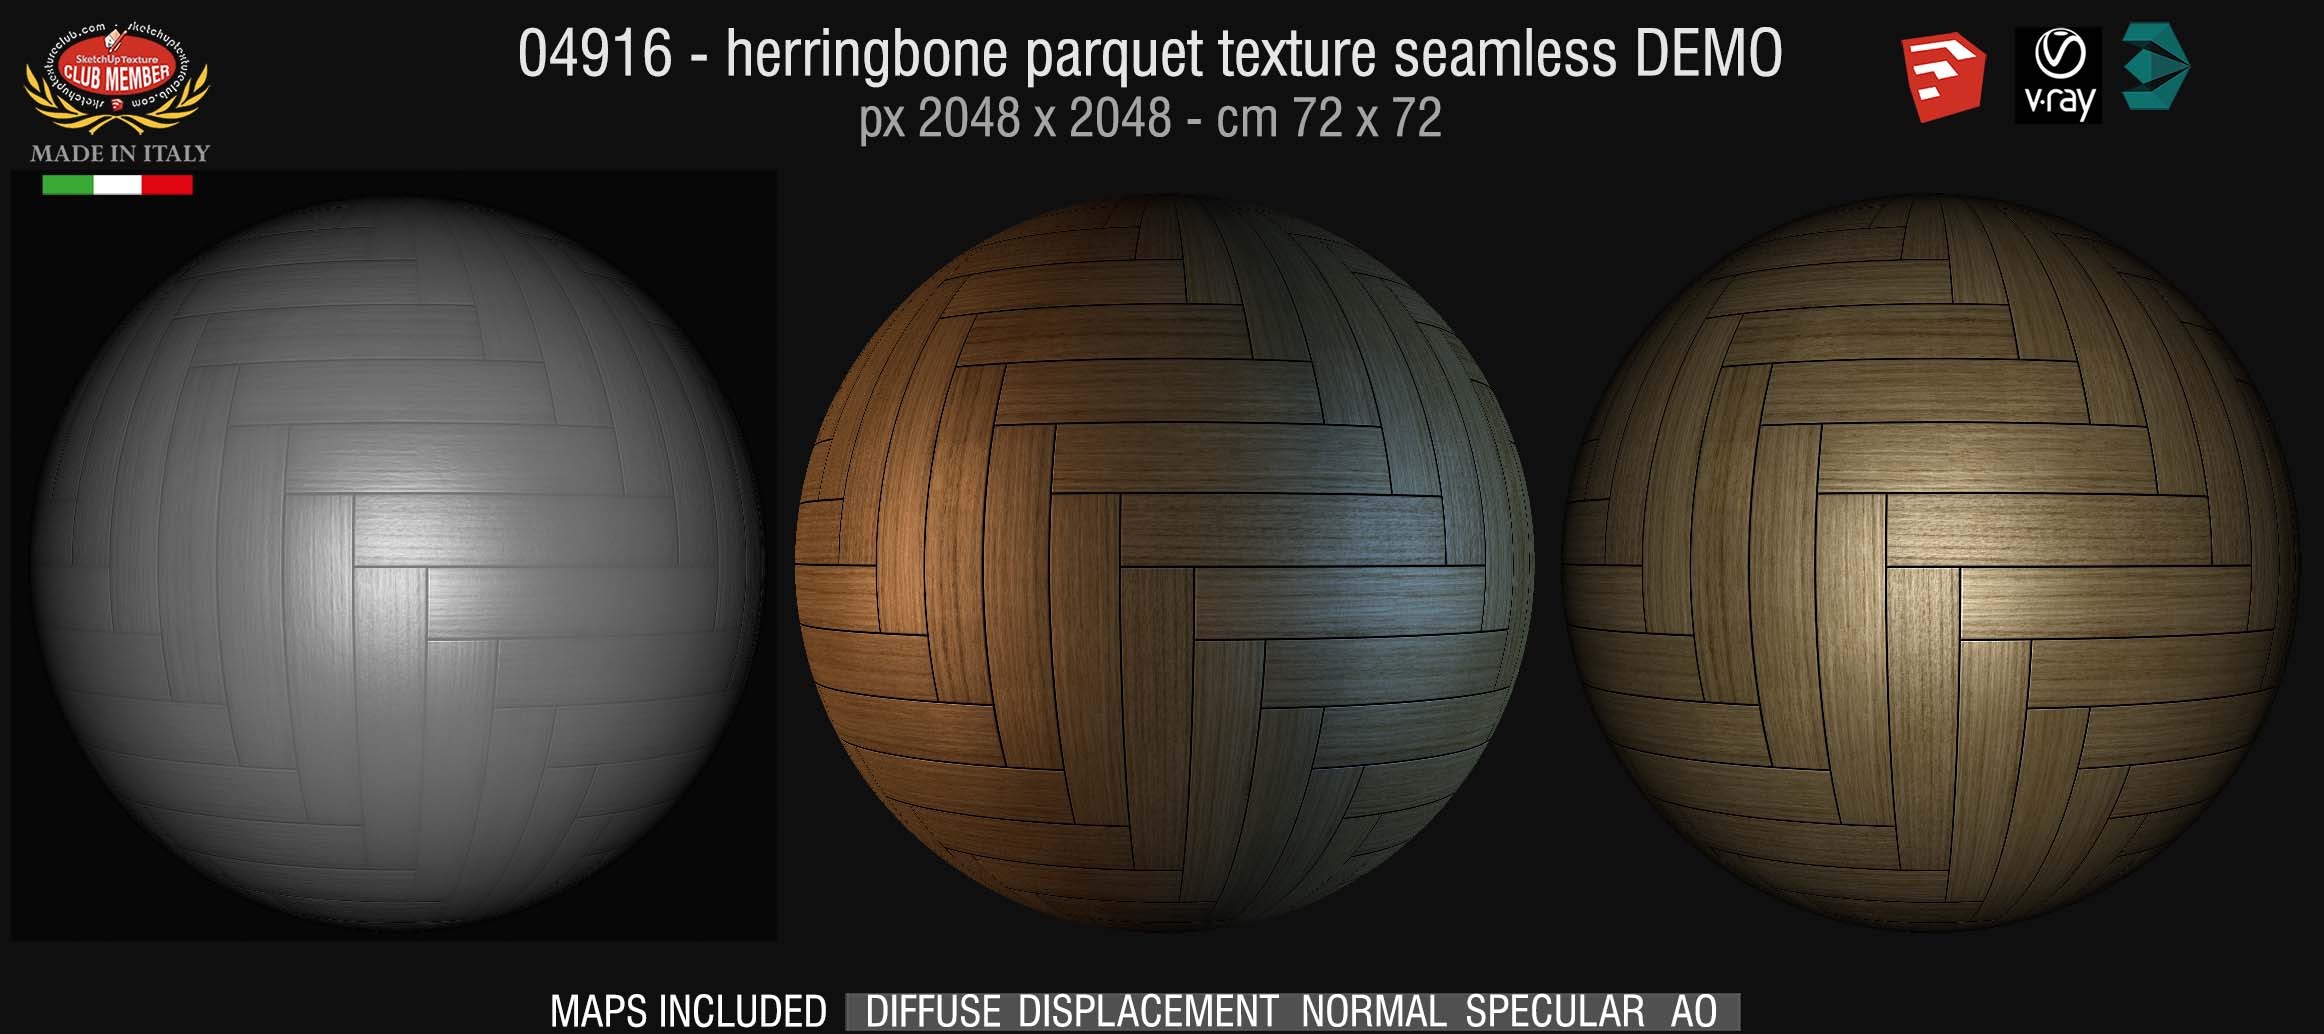 04916 HR Herringbone parquet texture seamless + maps DEMO